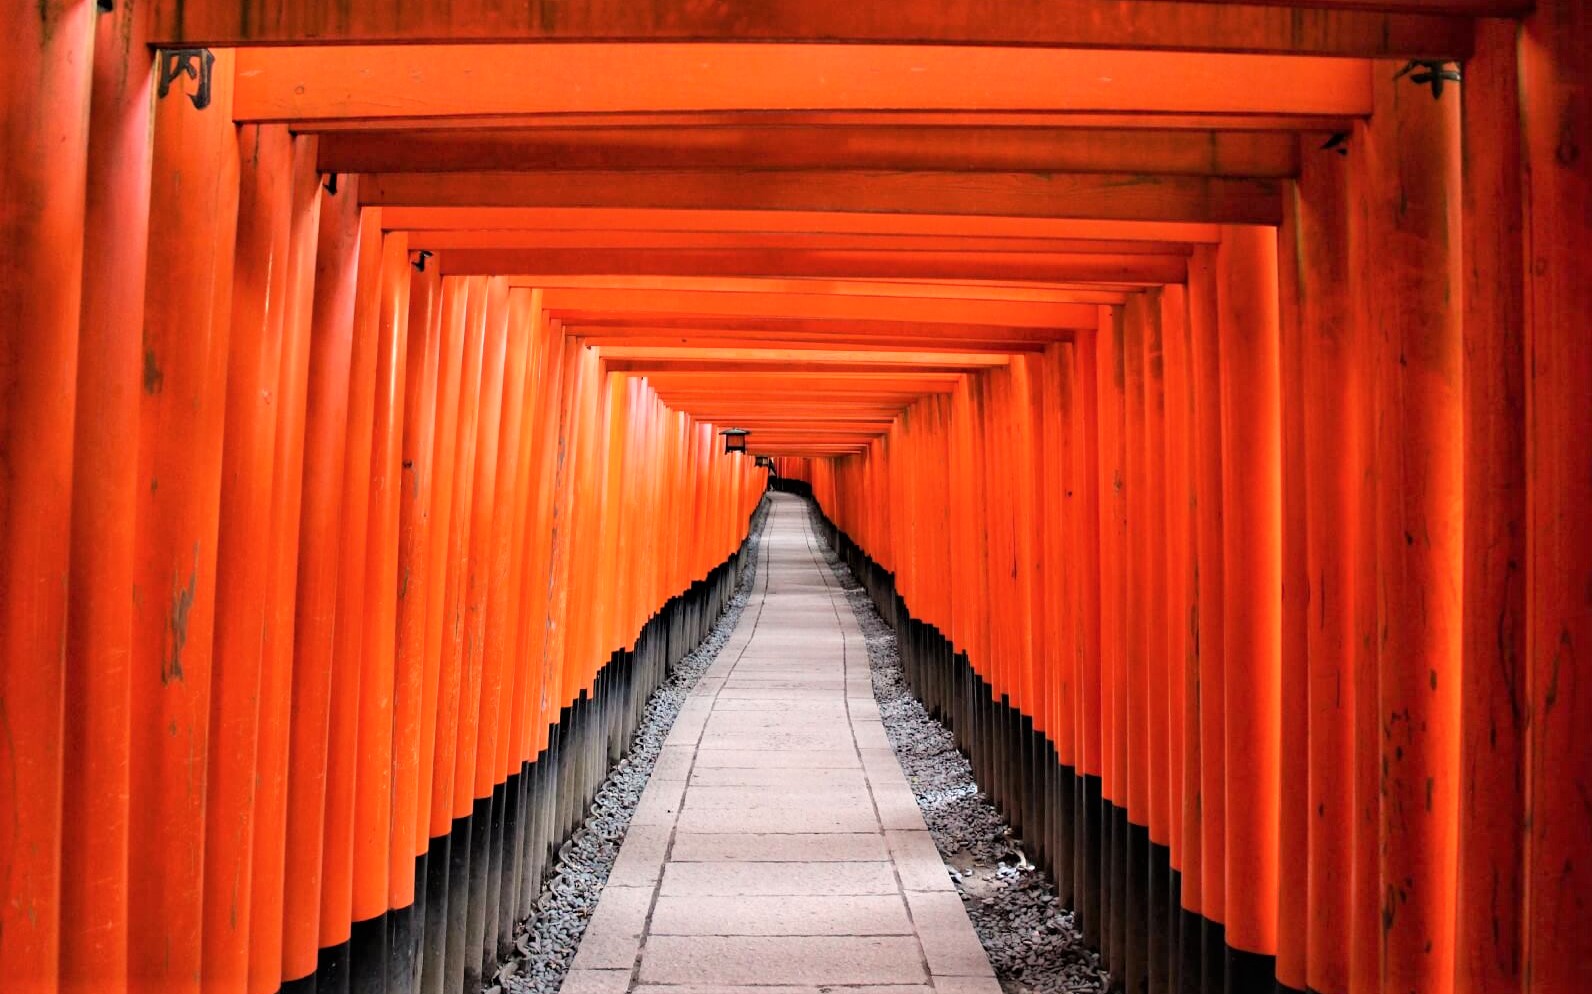 The picturesque vermilion torii gates at Fushimi Inari Taisha